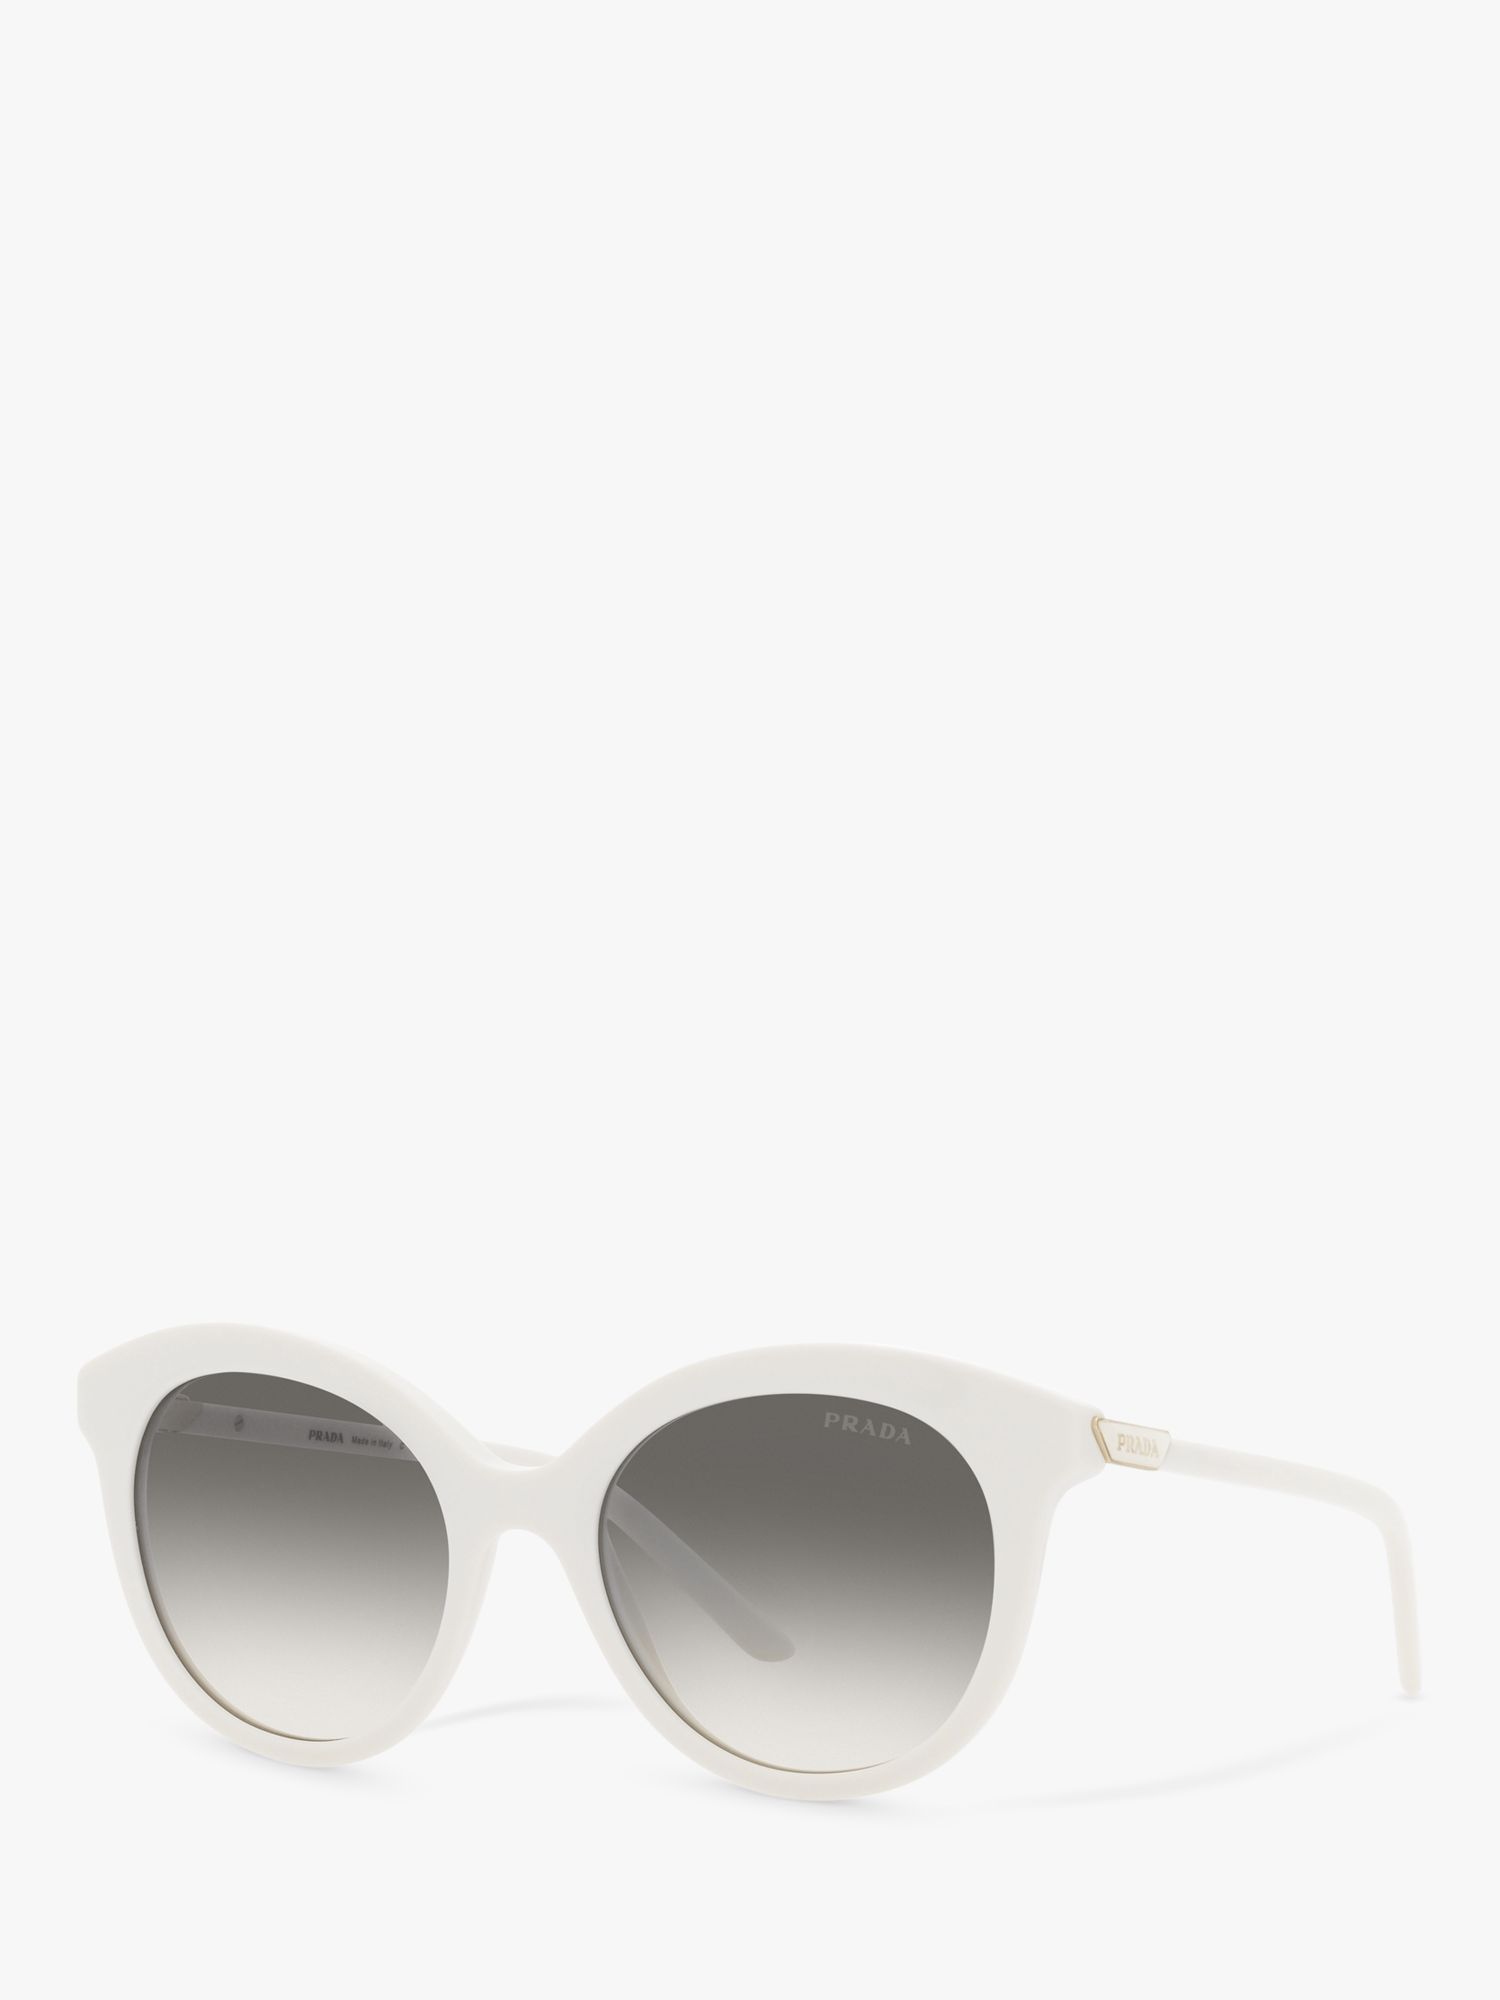 Prada PR02YS Women's Cat's Eye Sunglasses, White